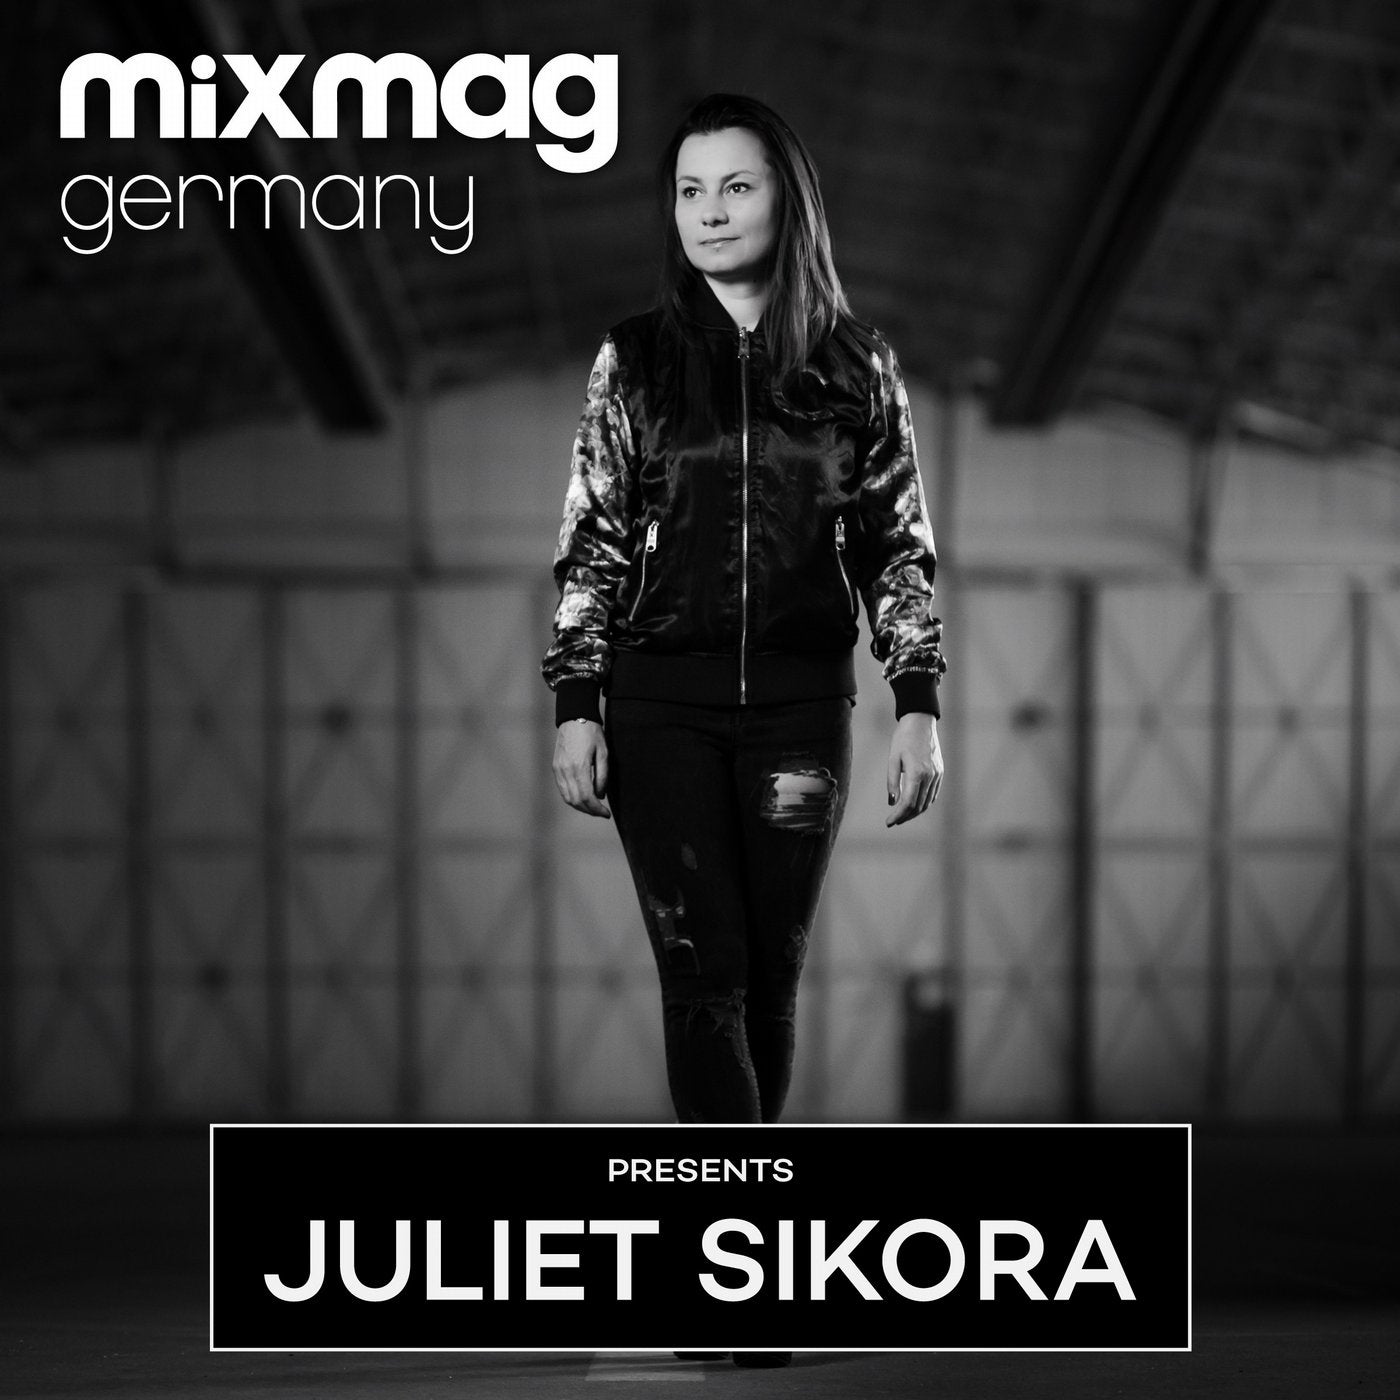 Mixmag Germany presents Juliet Sikora